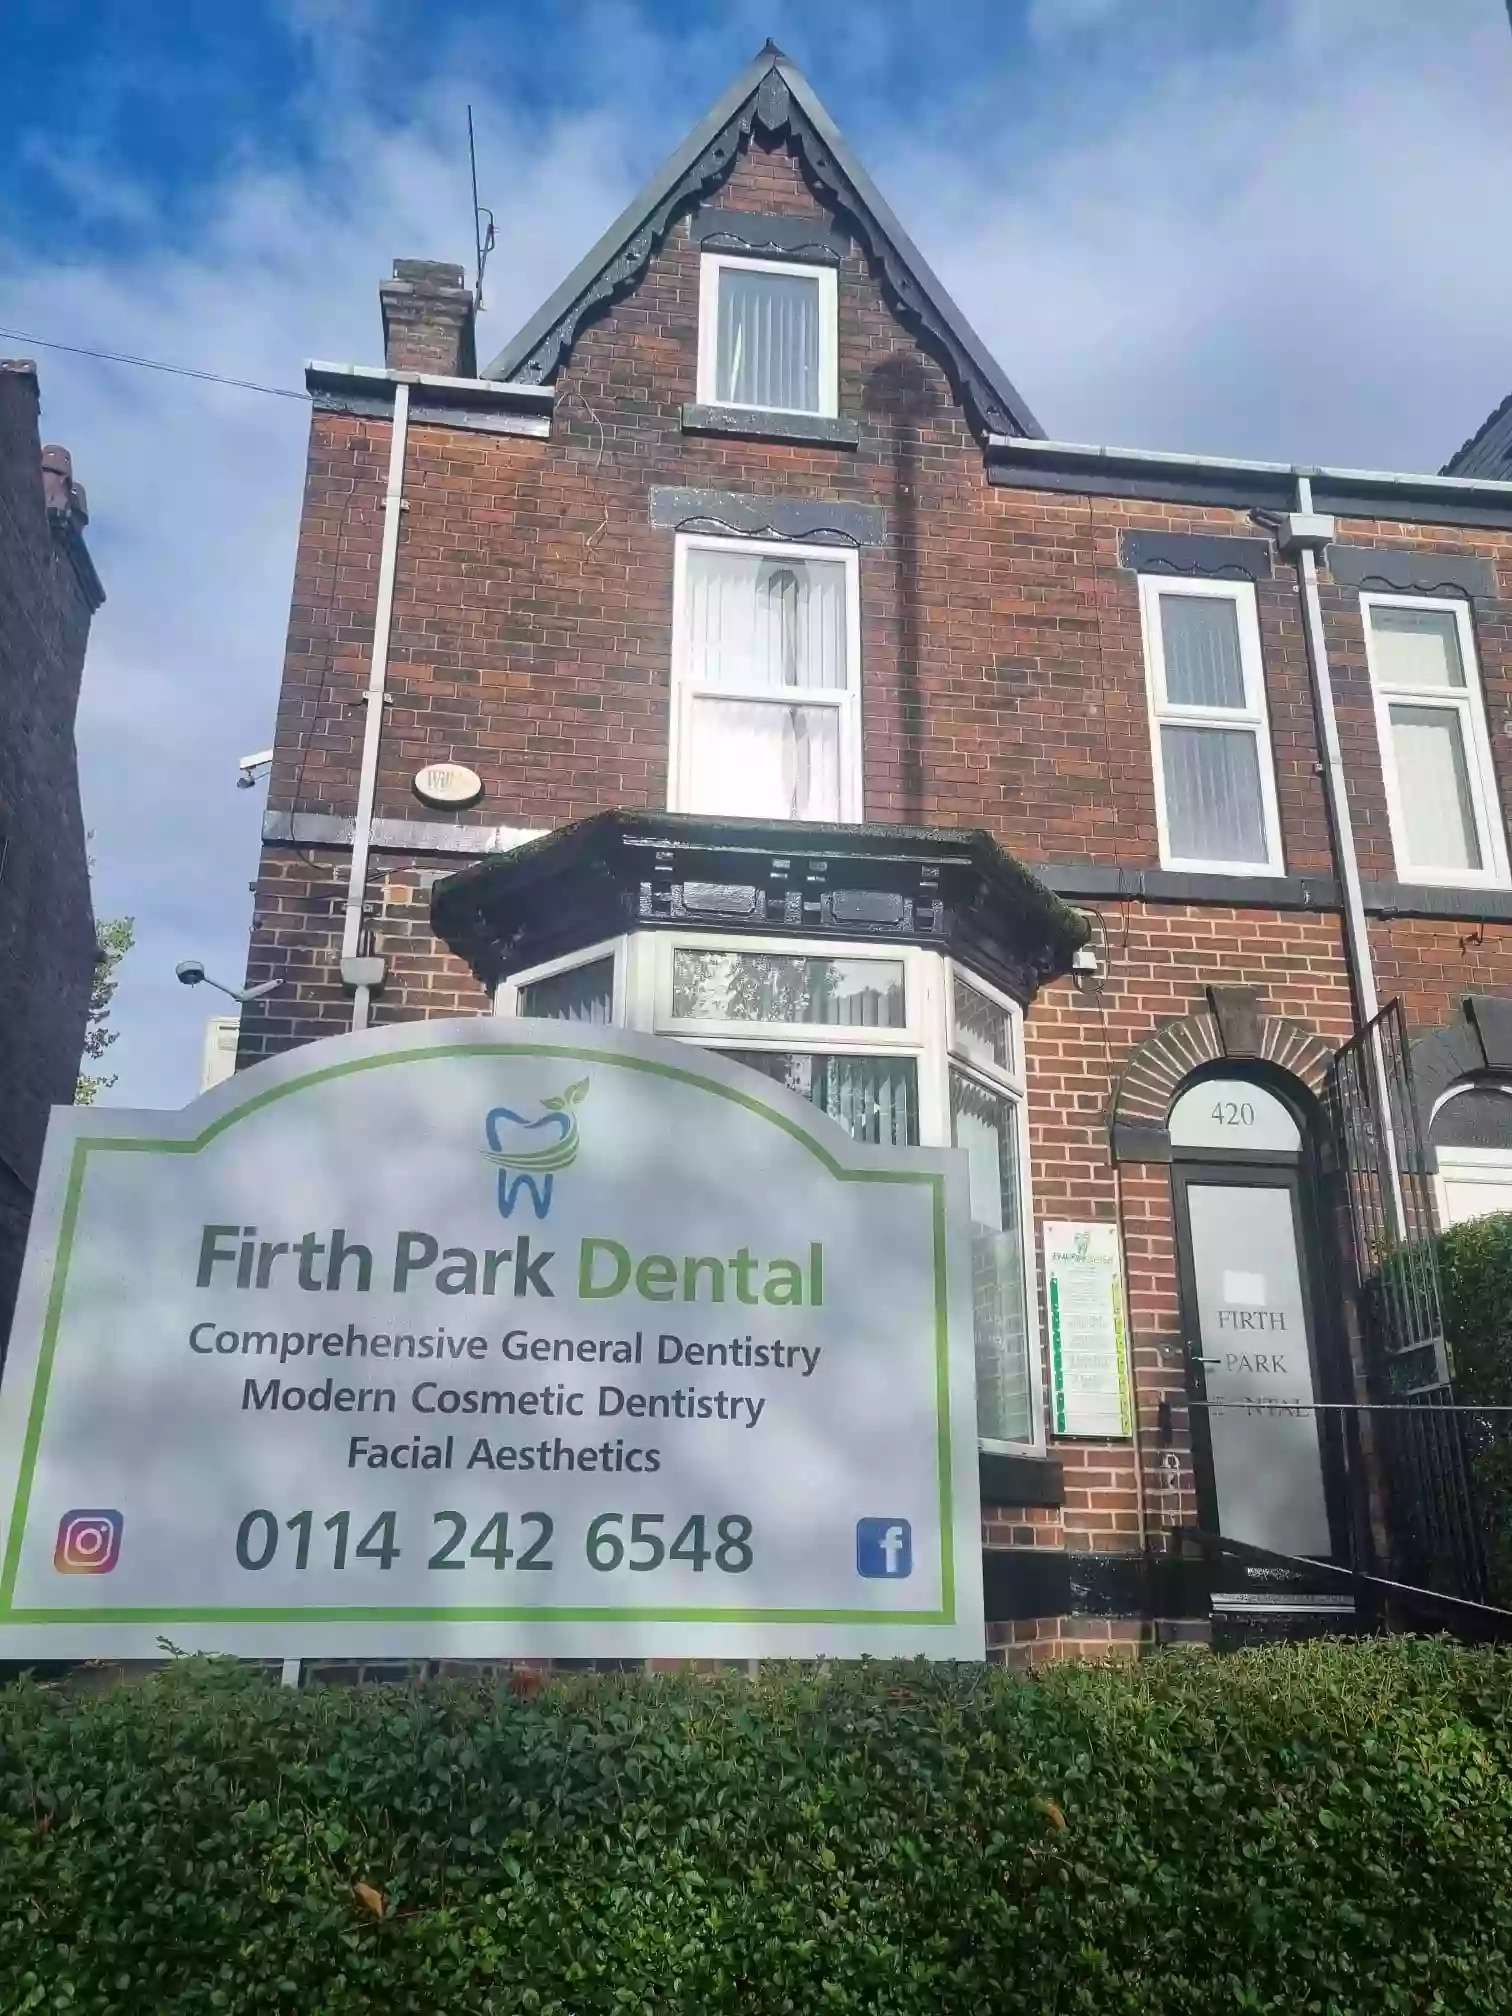 Firth Park Dental